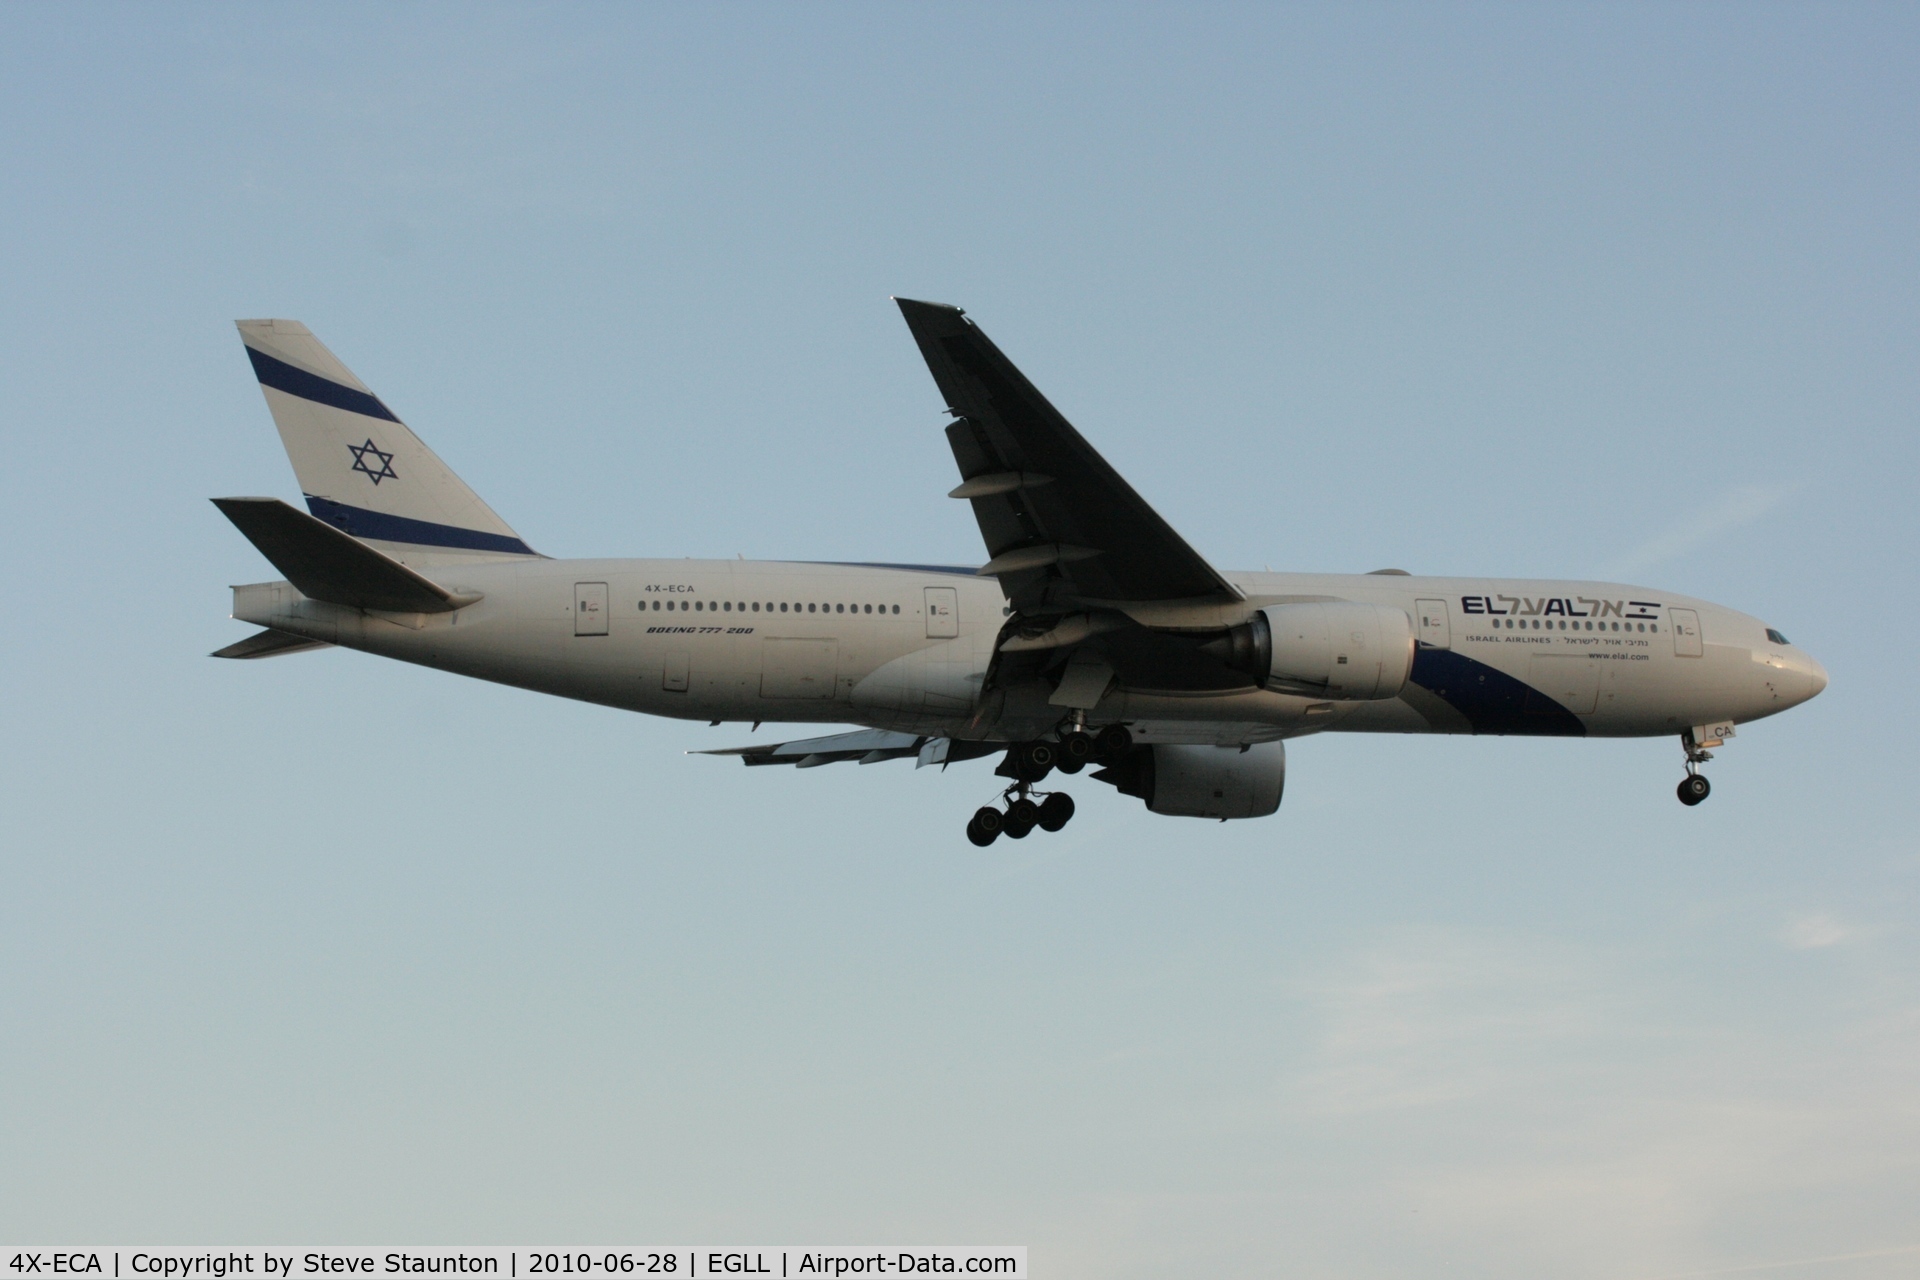 4X-ECA, 2001 Boeing 777-258/ER C/N 30831, Taken at Heathrow Airport, June 2010